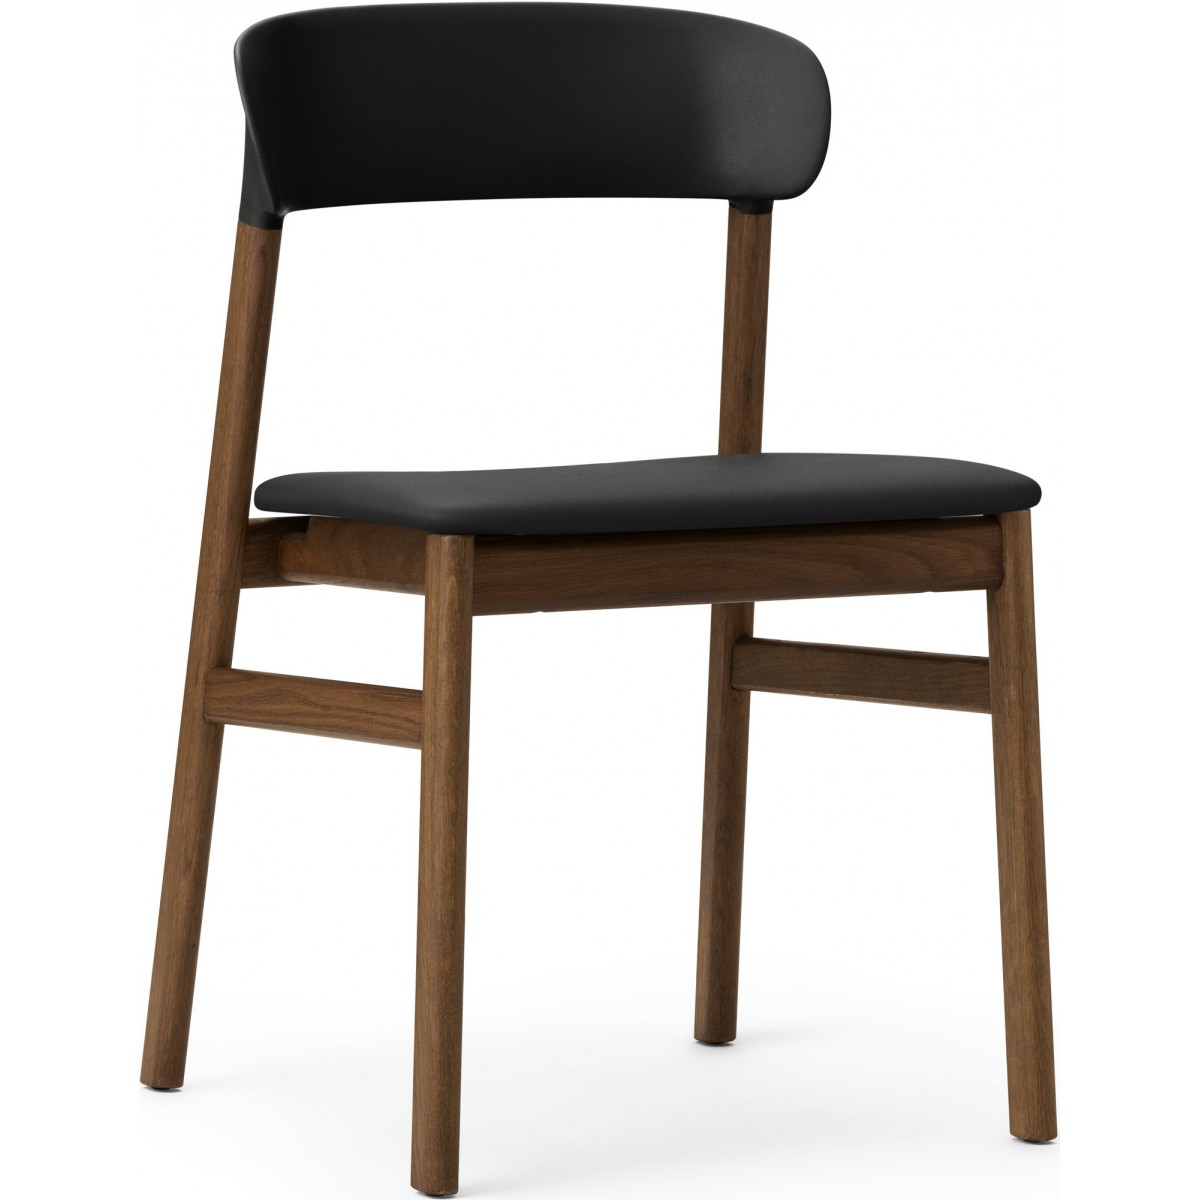 Spectrum Black leather / smoked oak - Herit chair